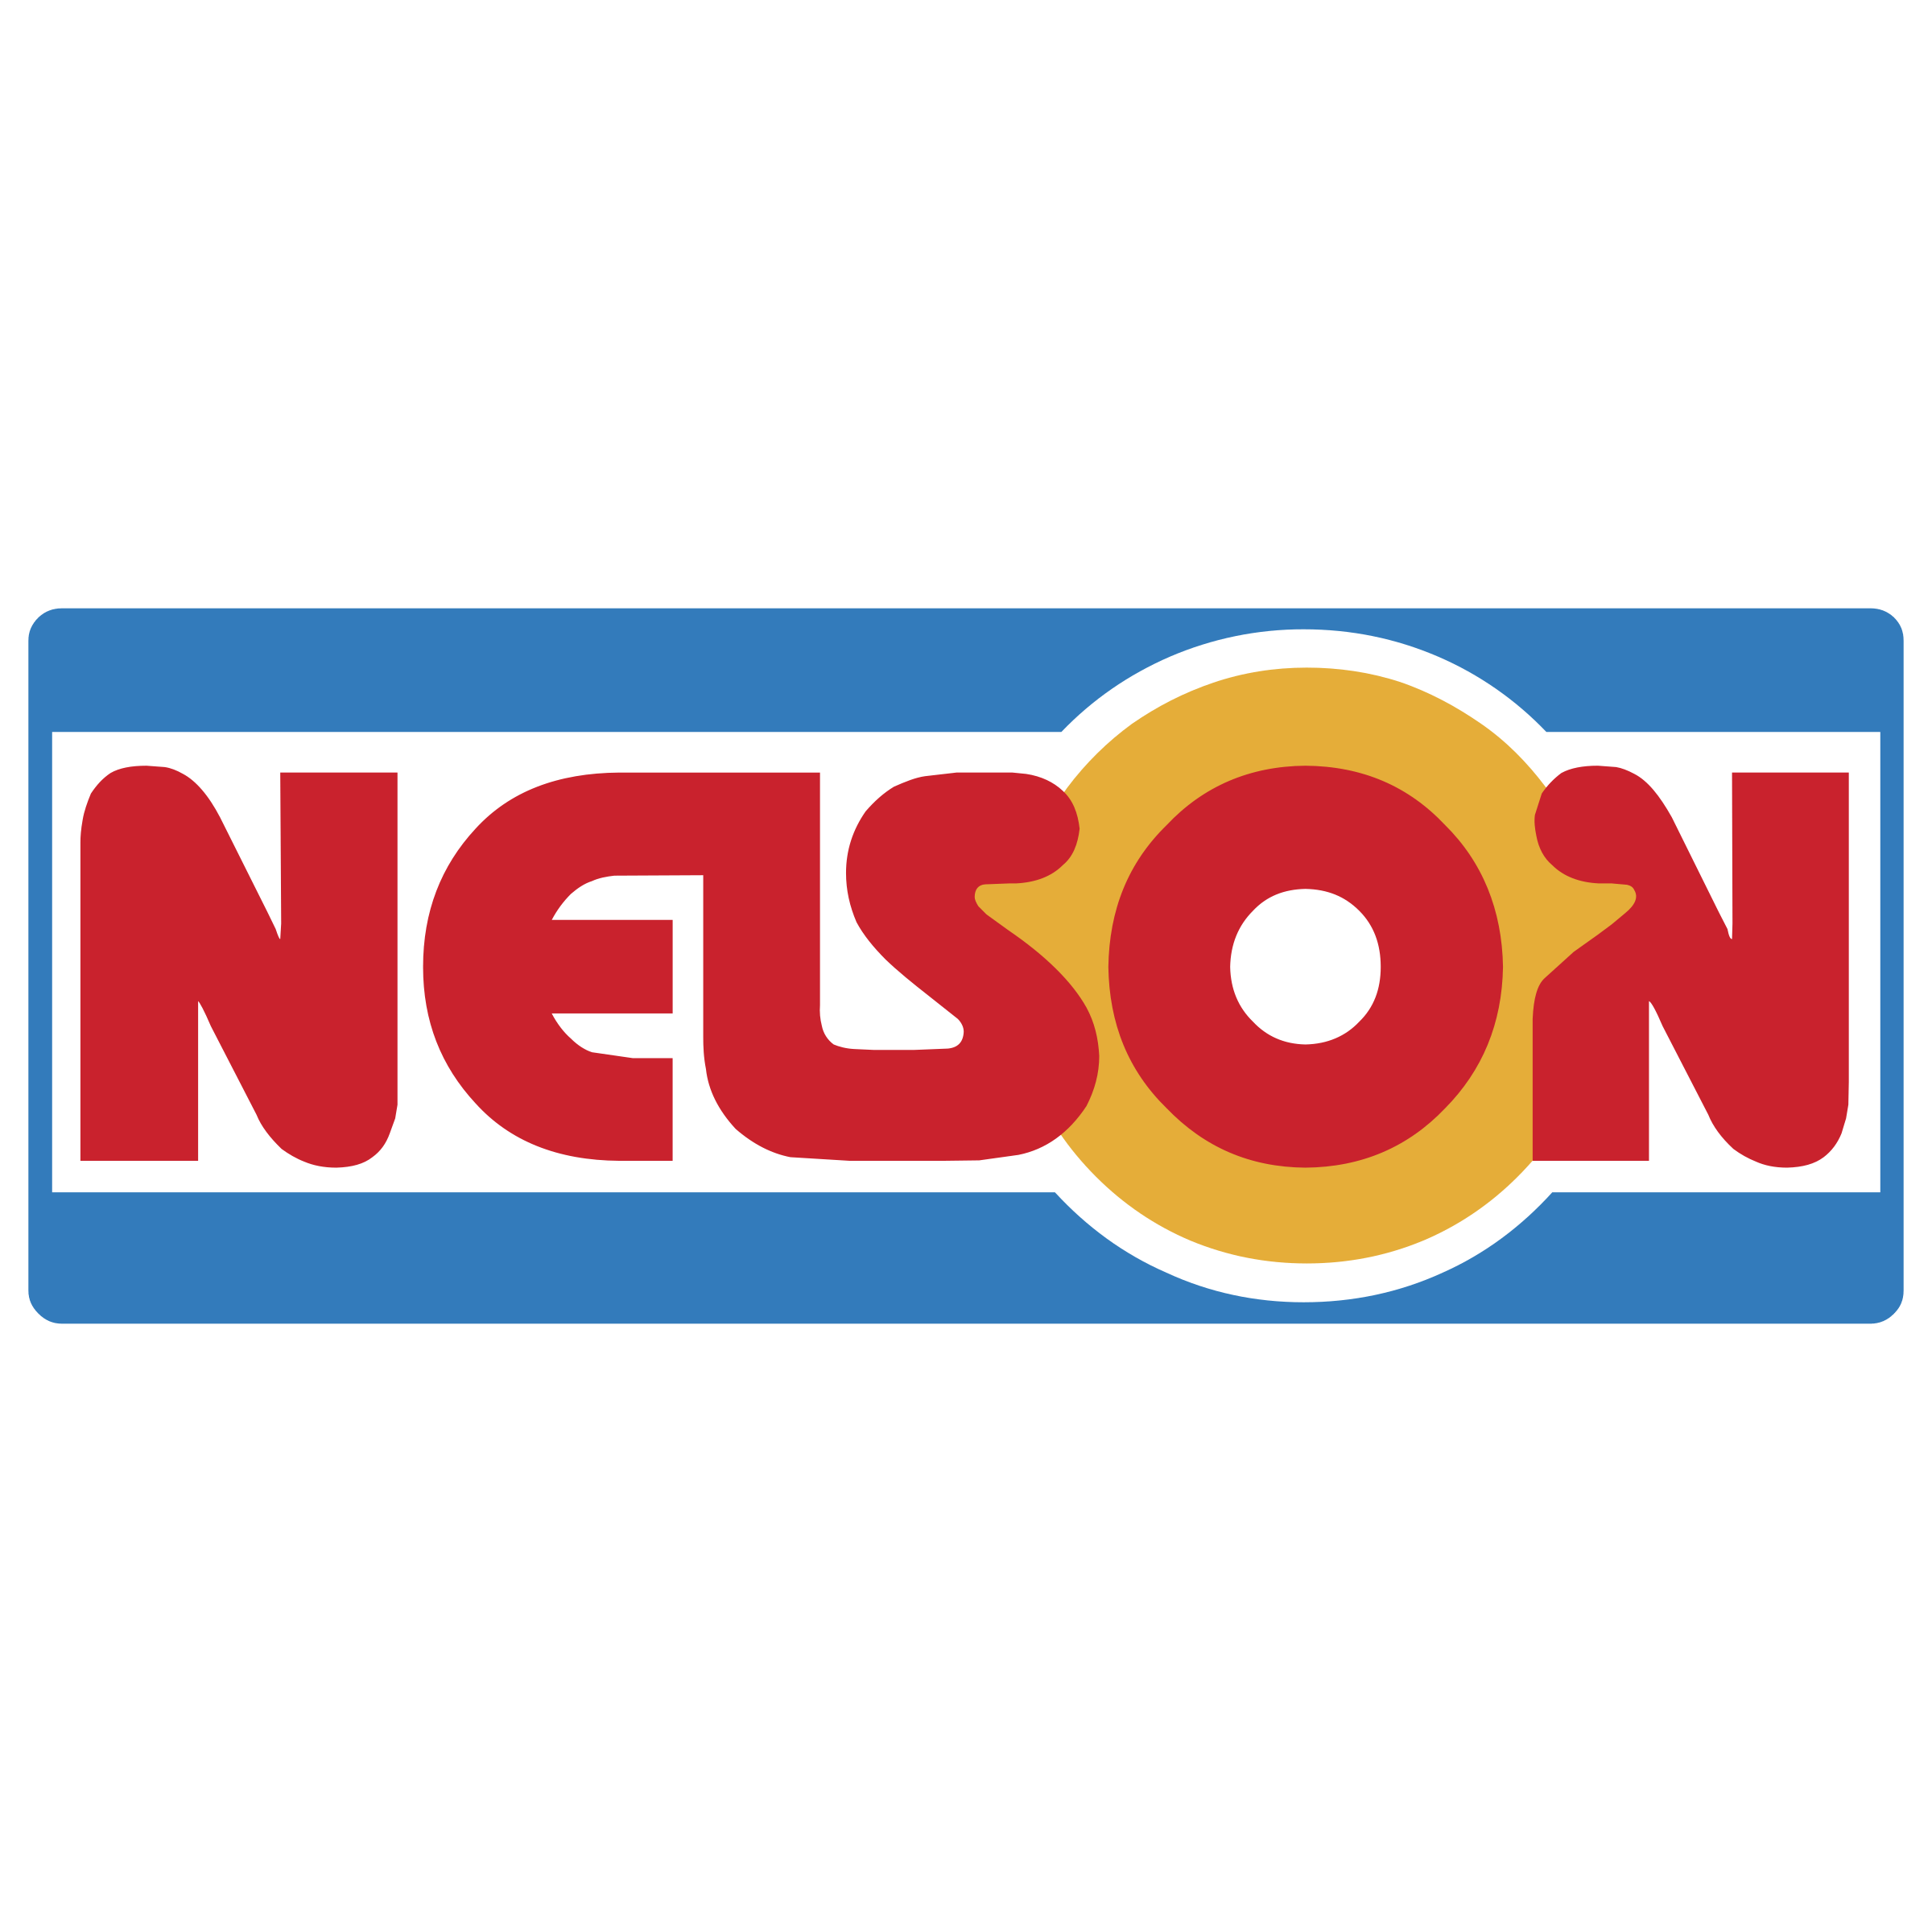 Nelson Logo - Nelson Logo PNG Transparent & SVG Vector